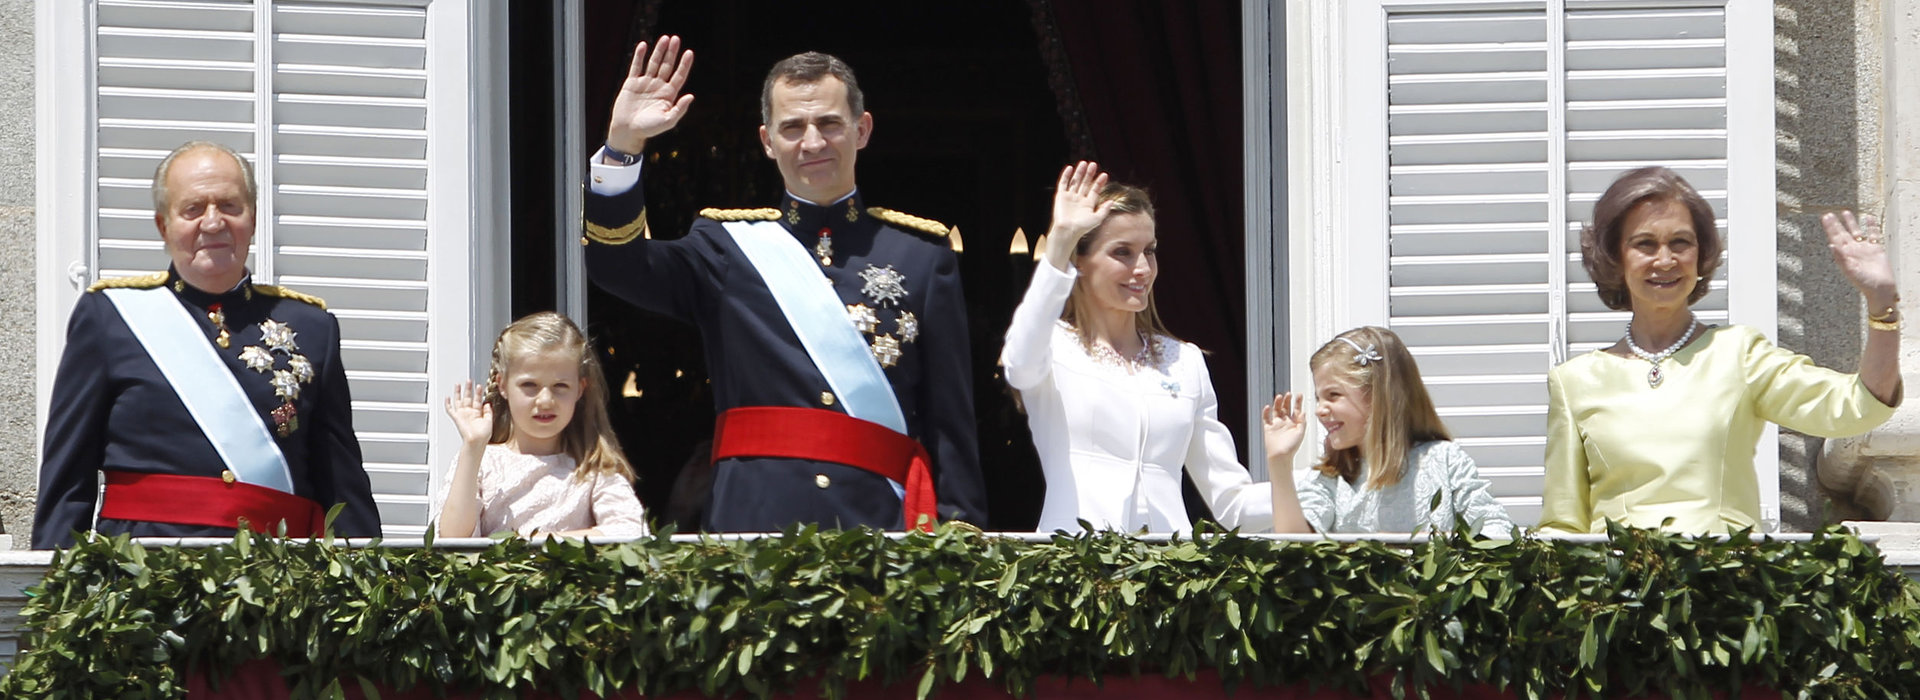 Felipe IV kröning Kung av Spanien